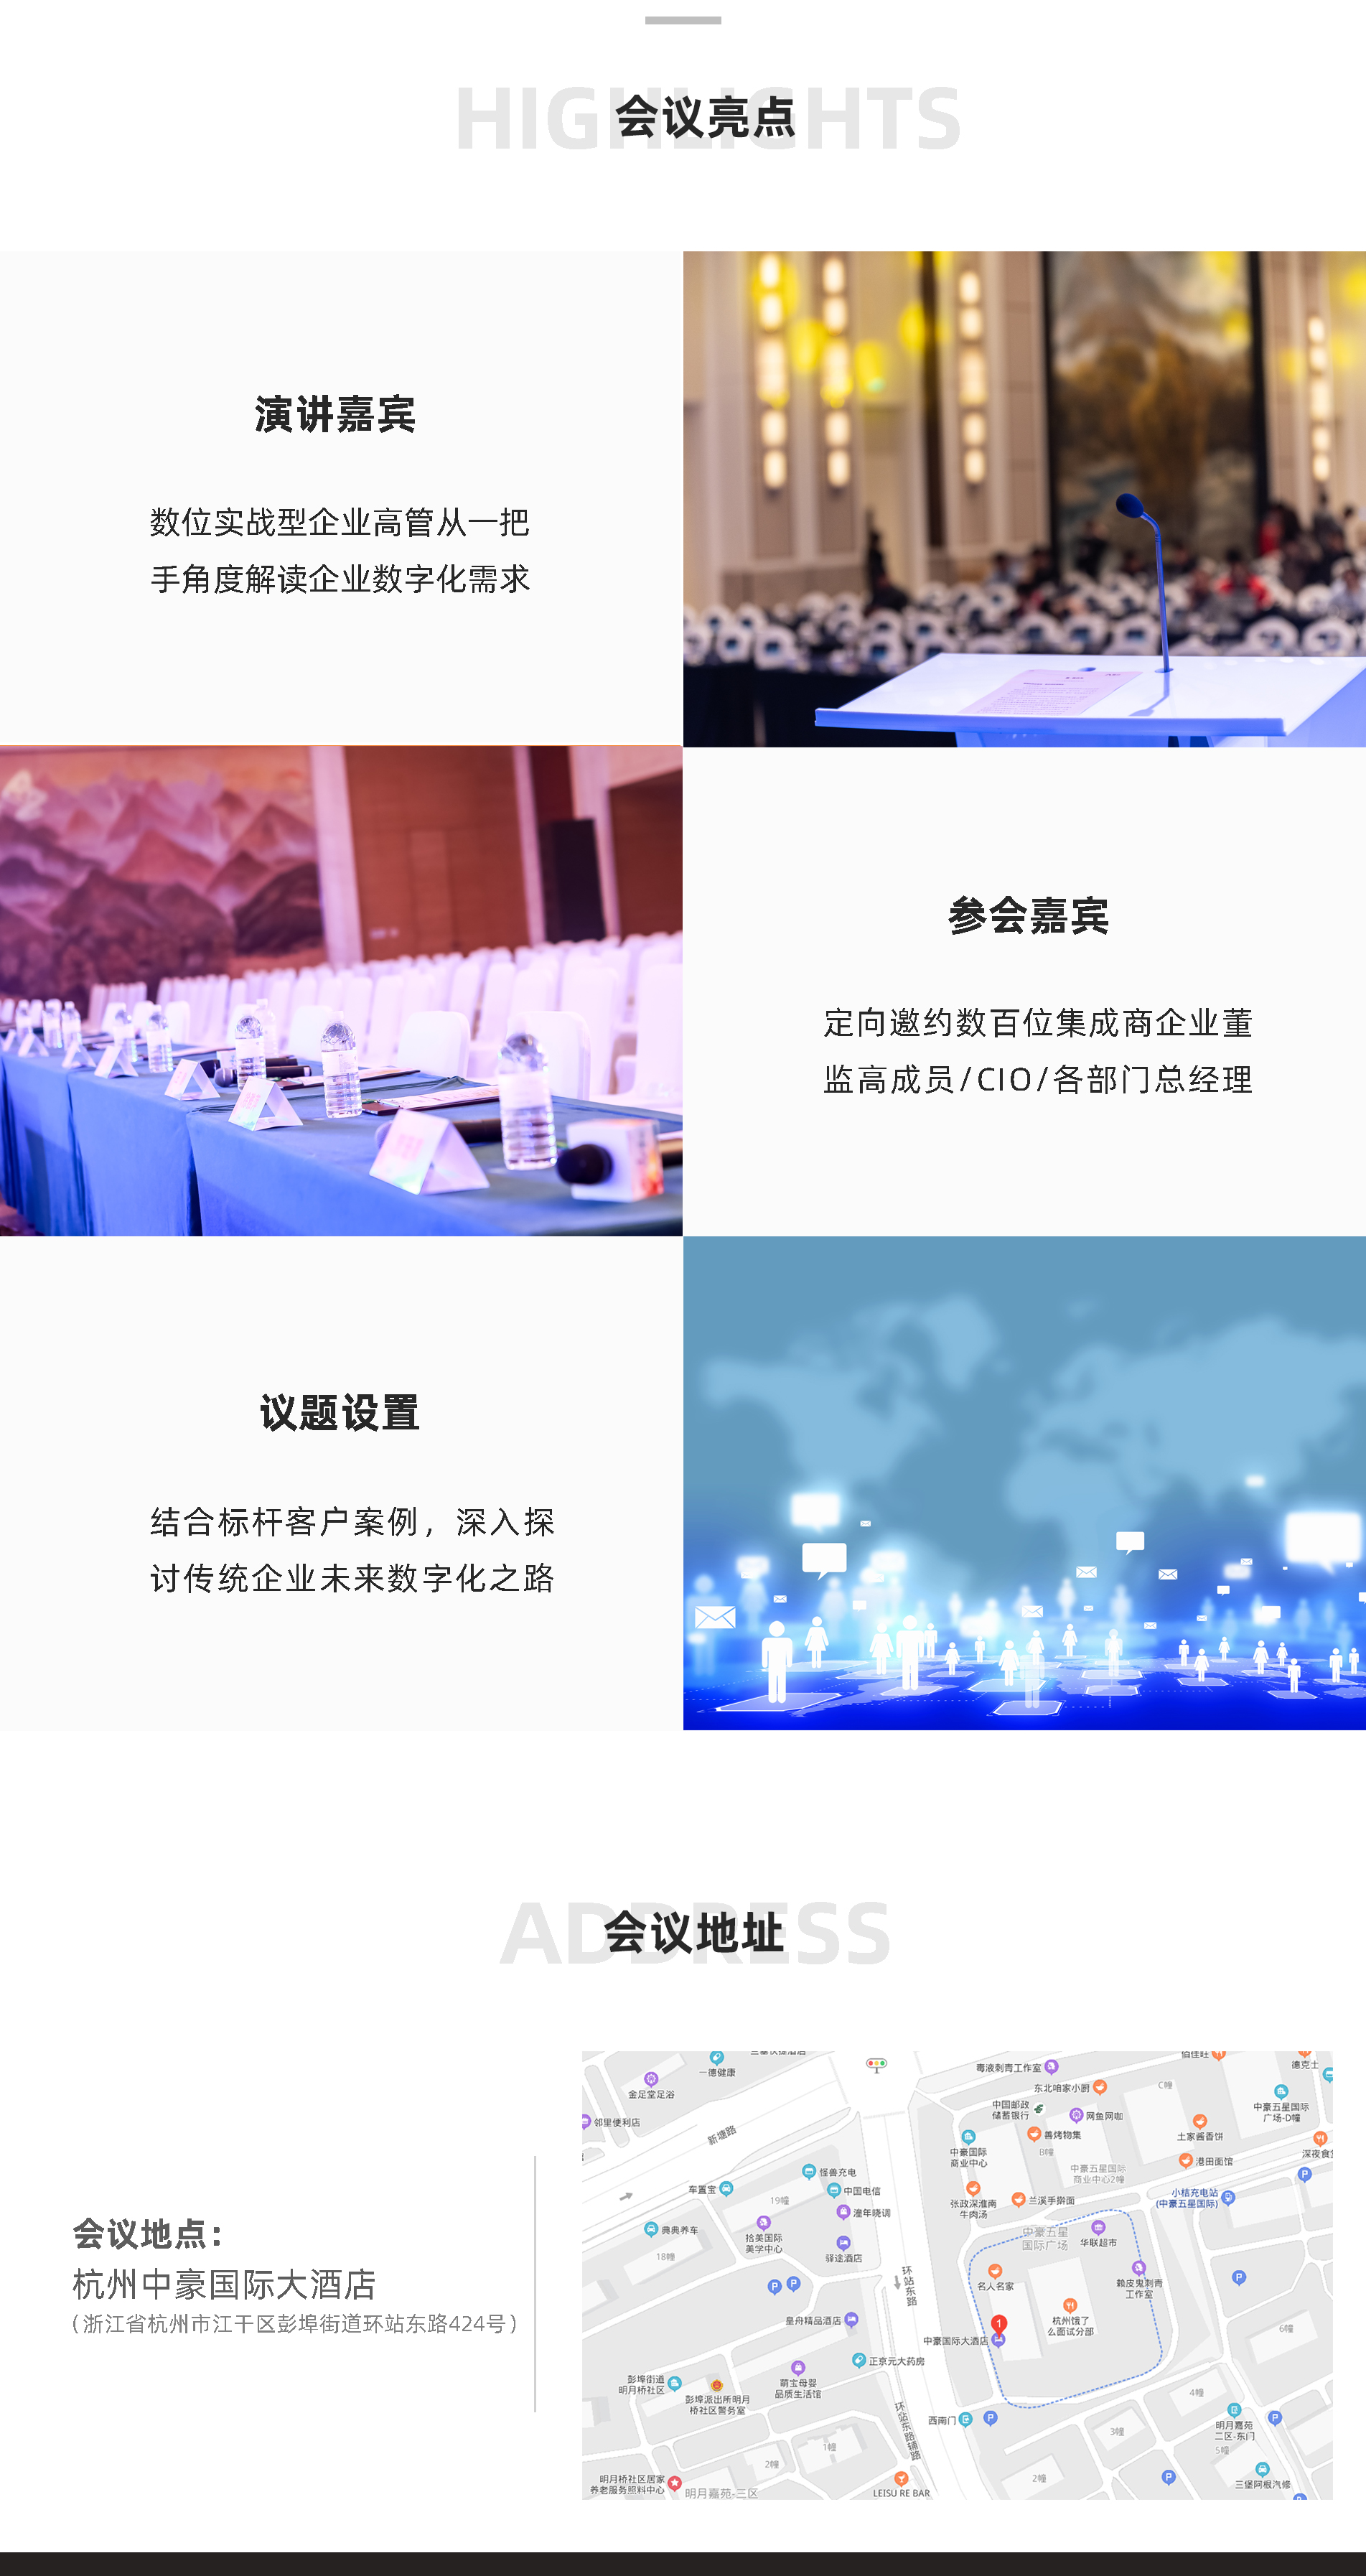 第二届LinkWAN ICT渠道沙龙（杭州）